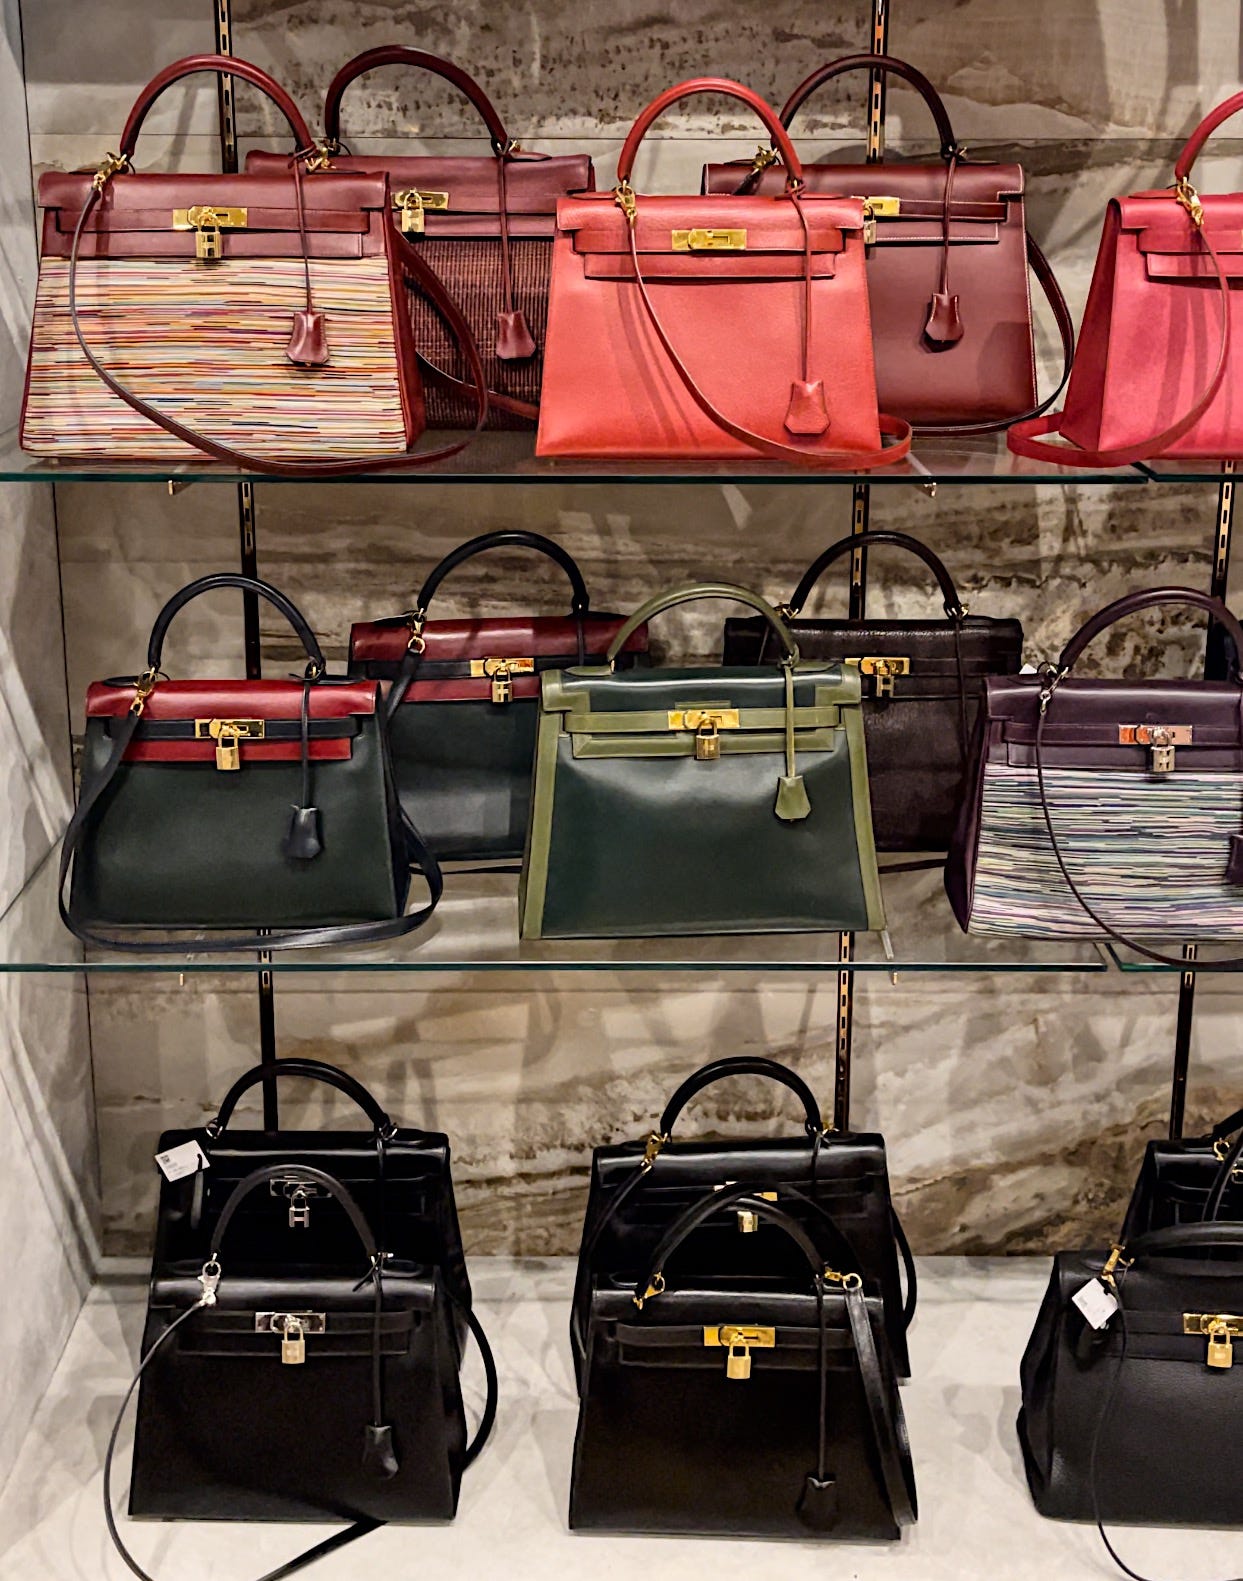 Designer Handbag Heaven is Not Paris - by Diana Tsui